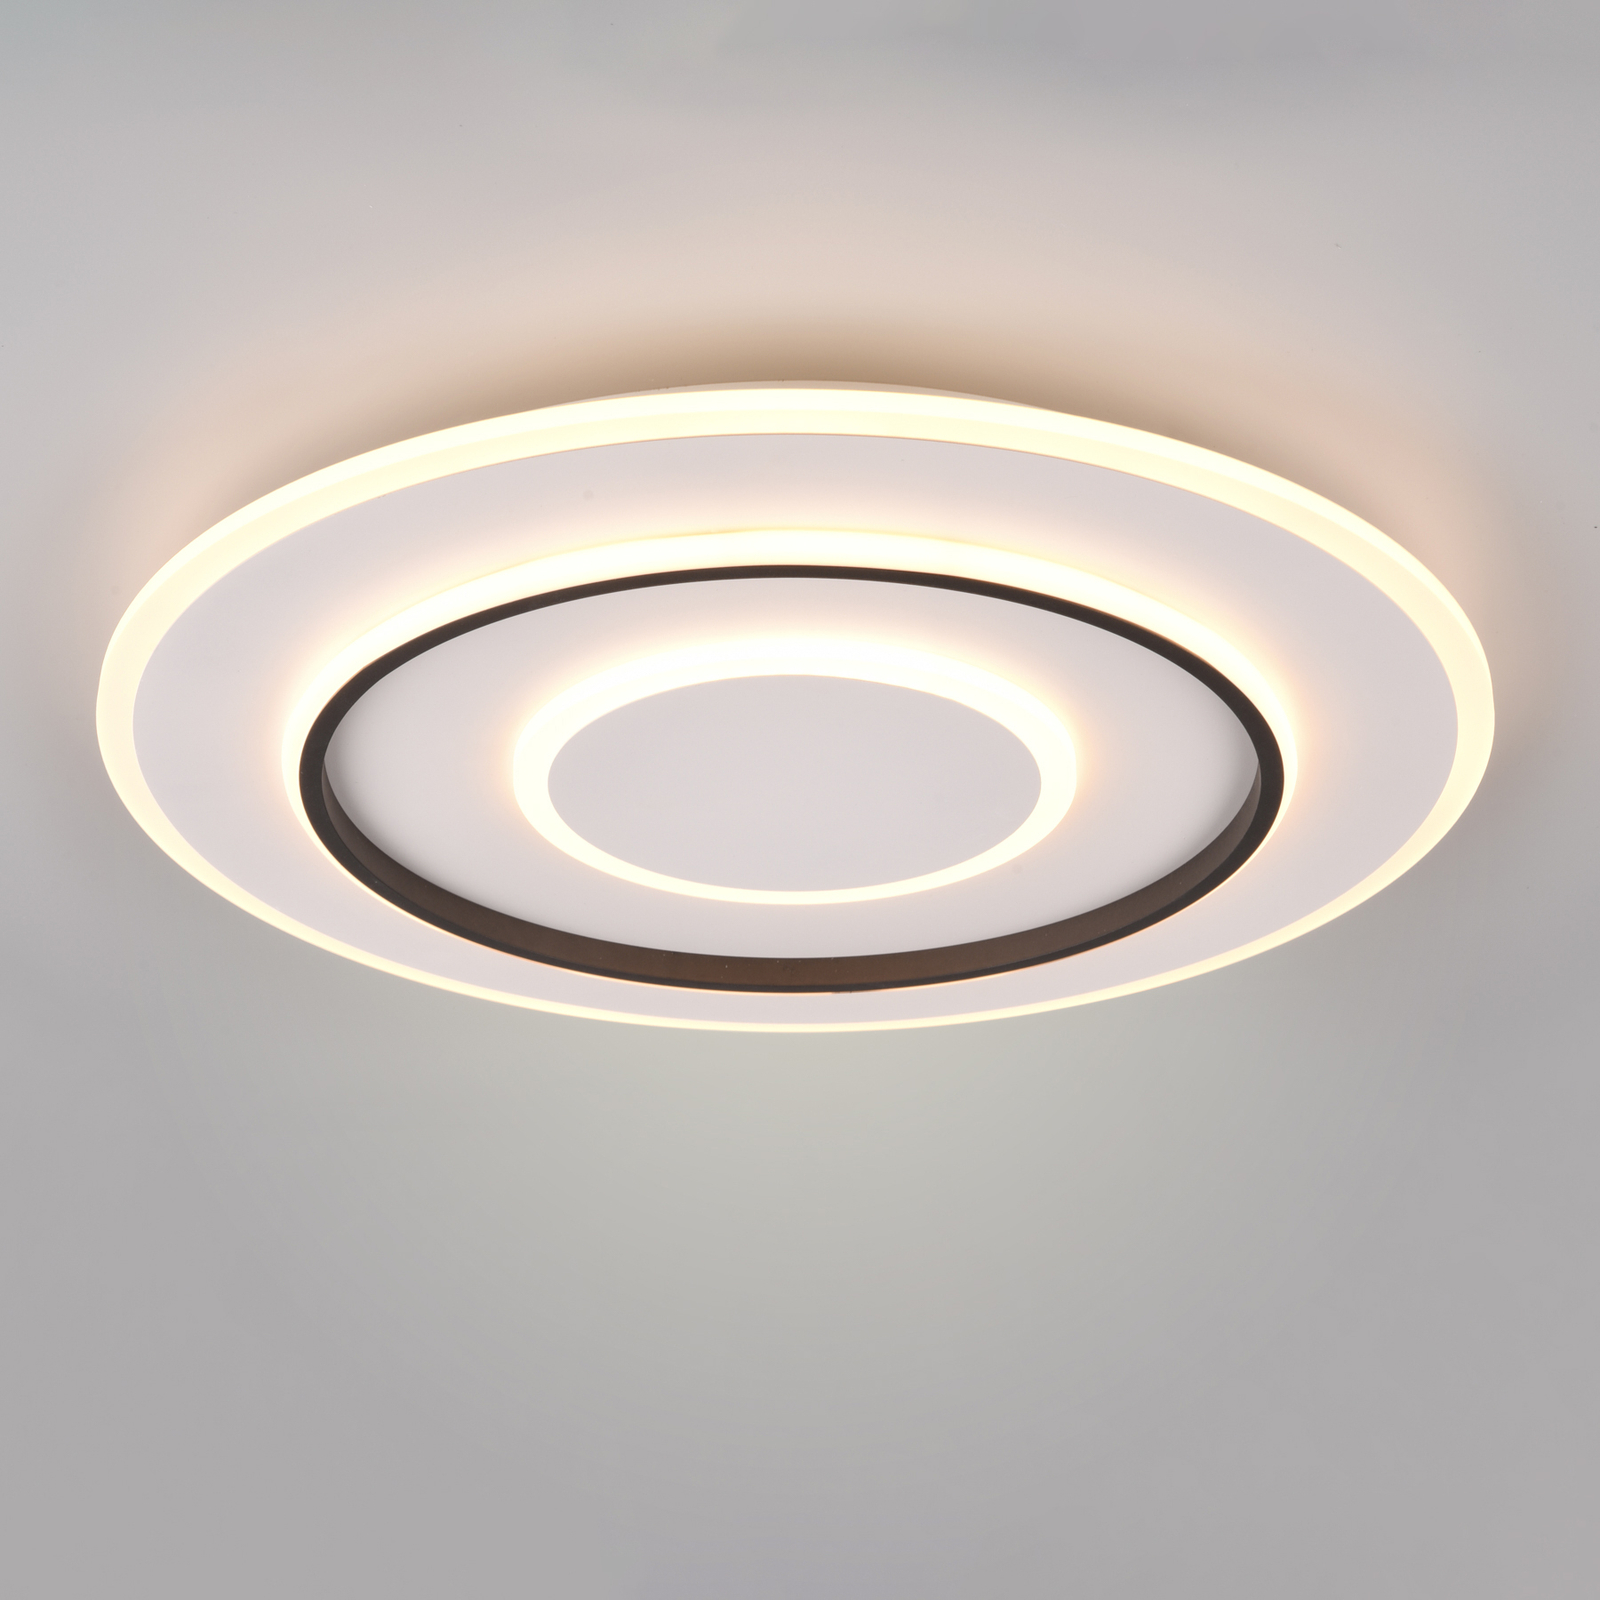 LED plafondlamp Jora rond afstandsbediening, Ø 60 cm